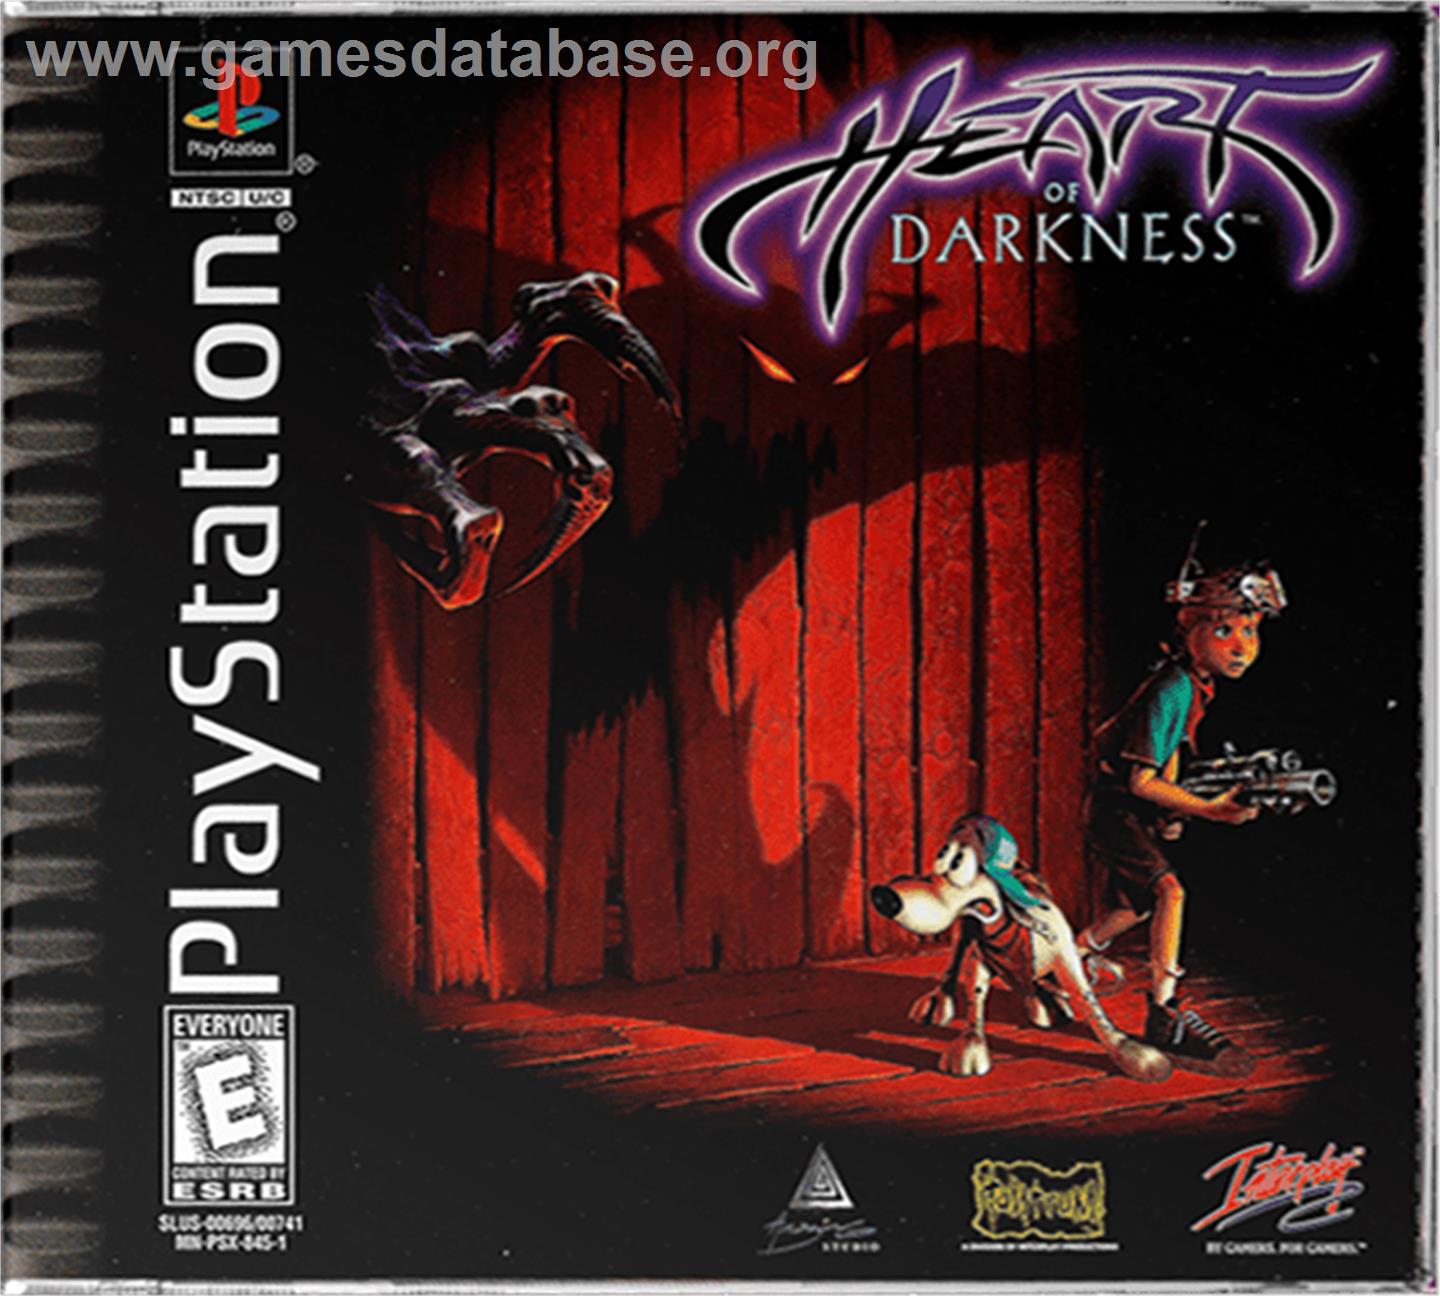 Heart of Darkness - Sony Playstation - Artwork - Box